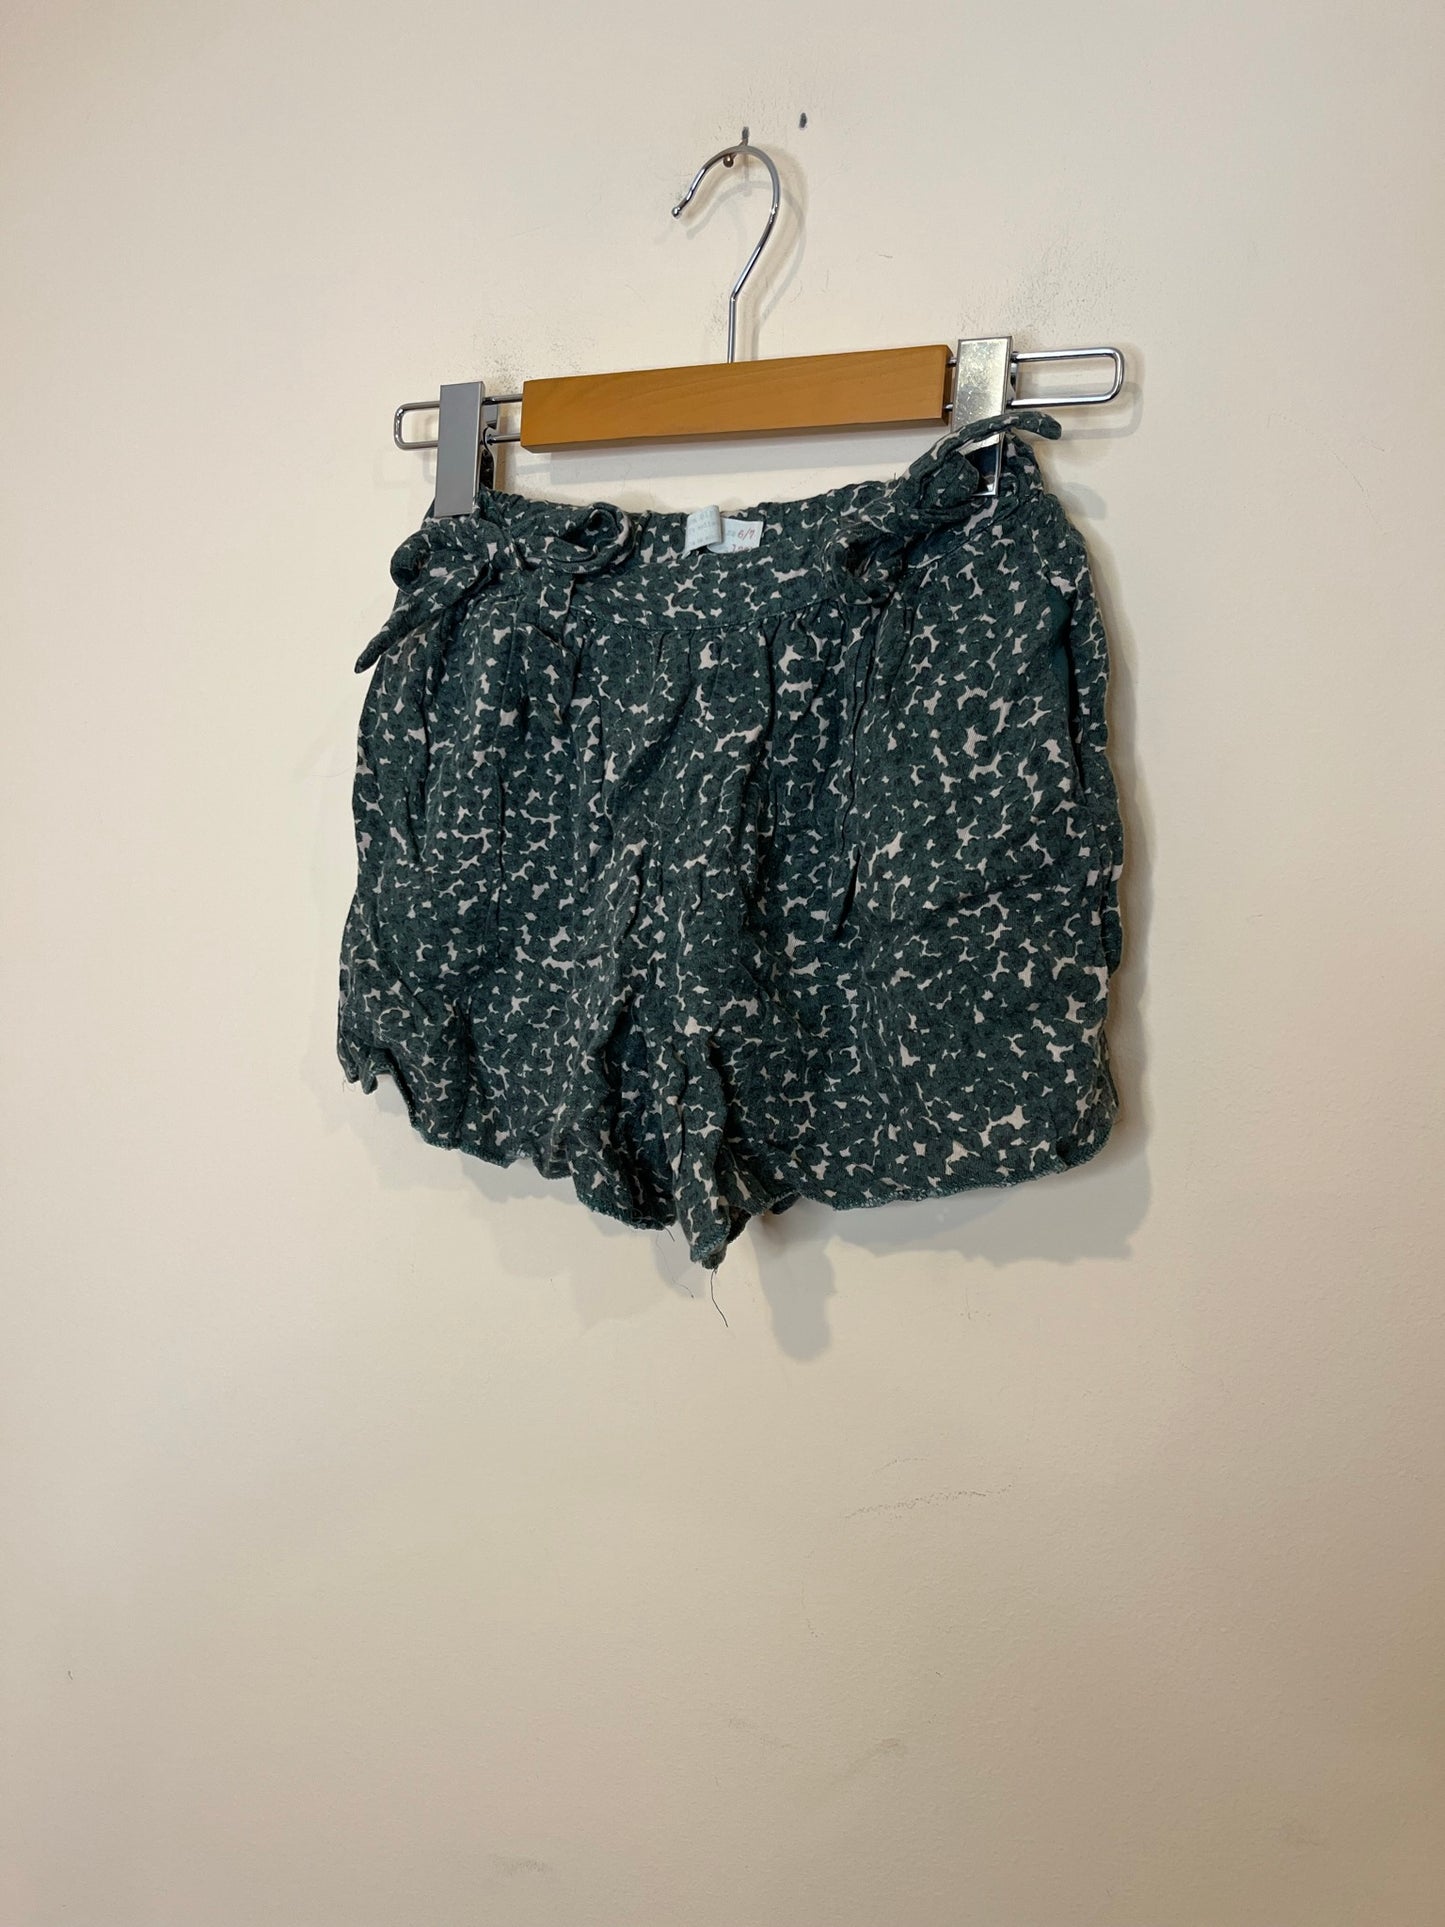 Zara Flowy Floral Side-Tie Shorts (6-7)